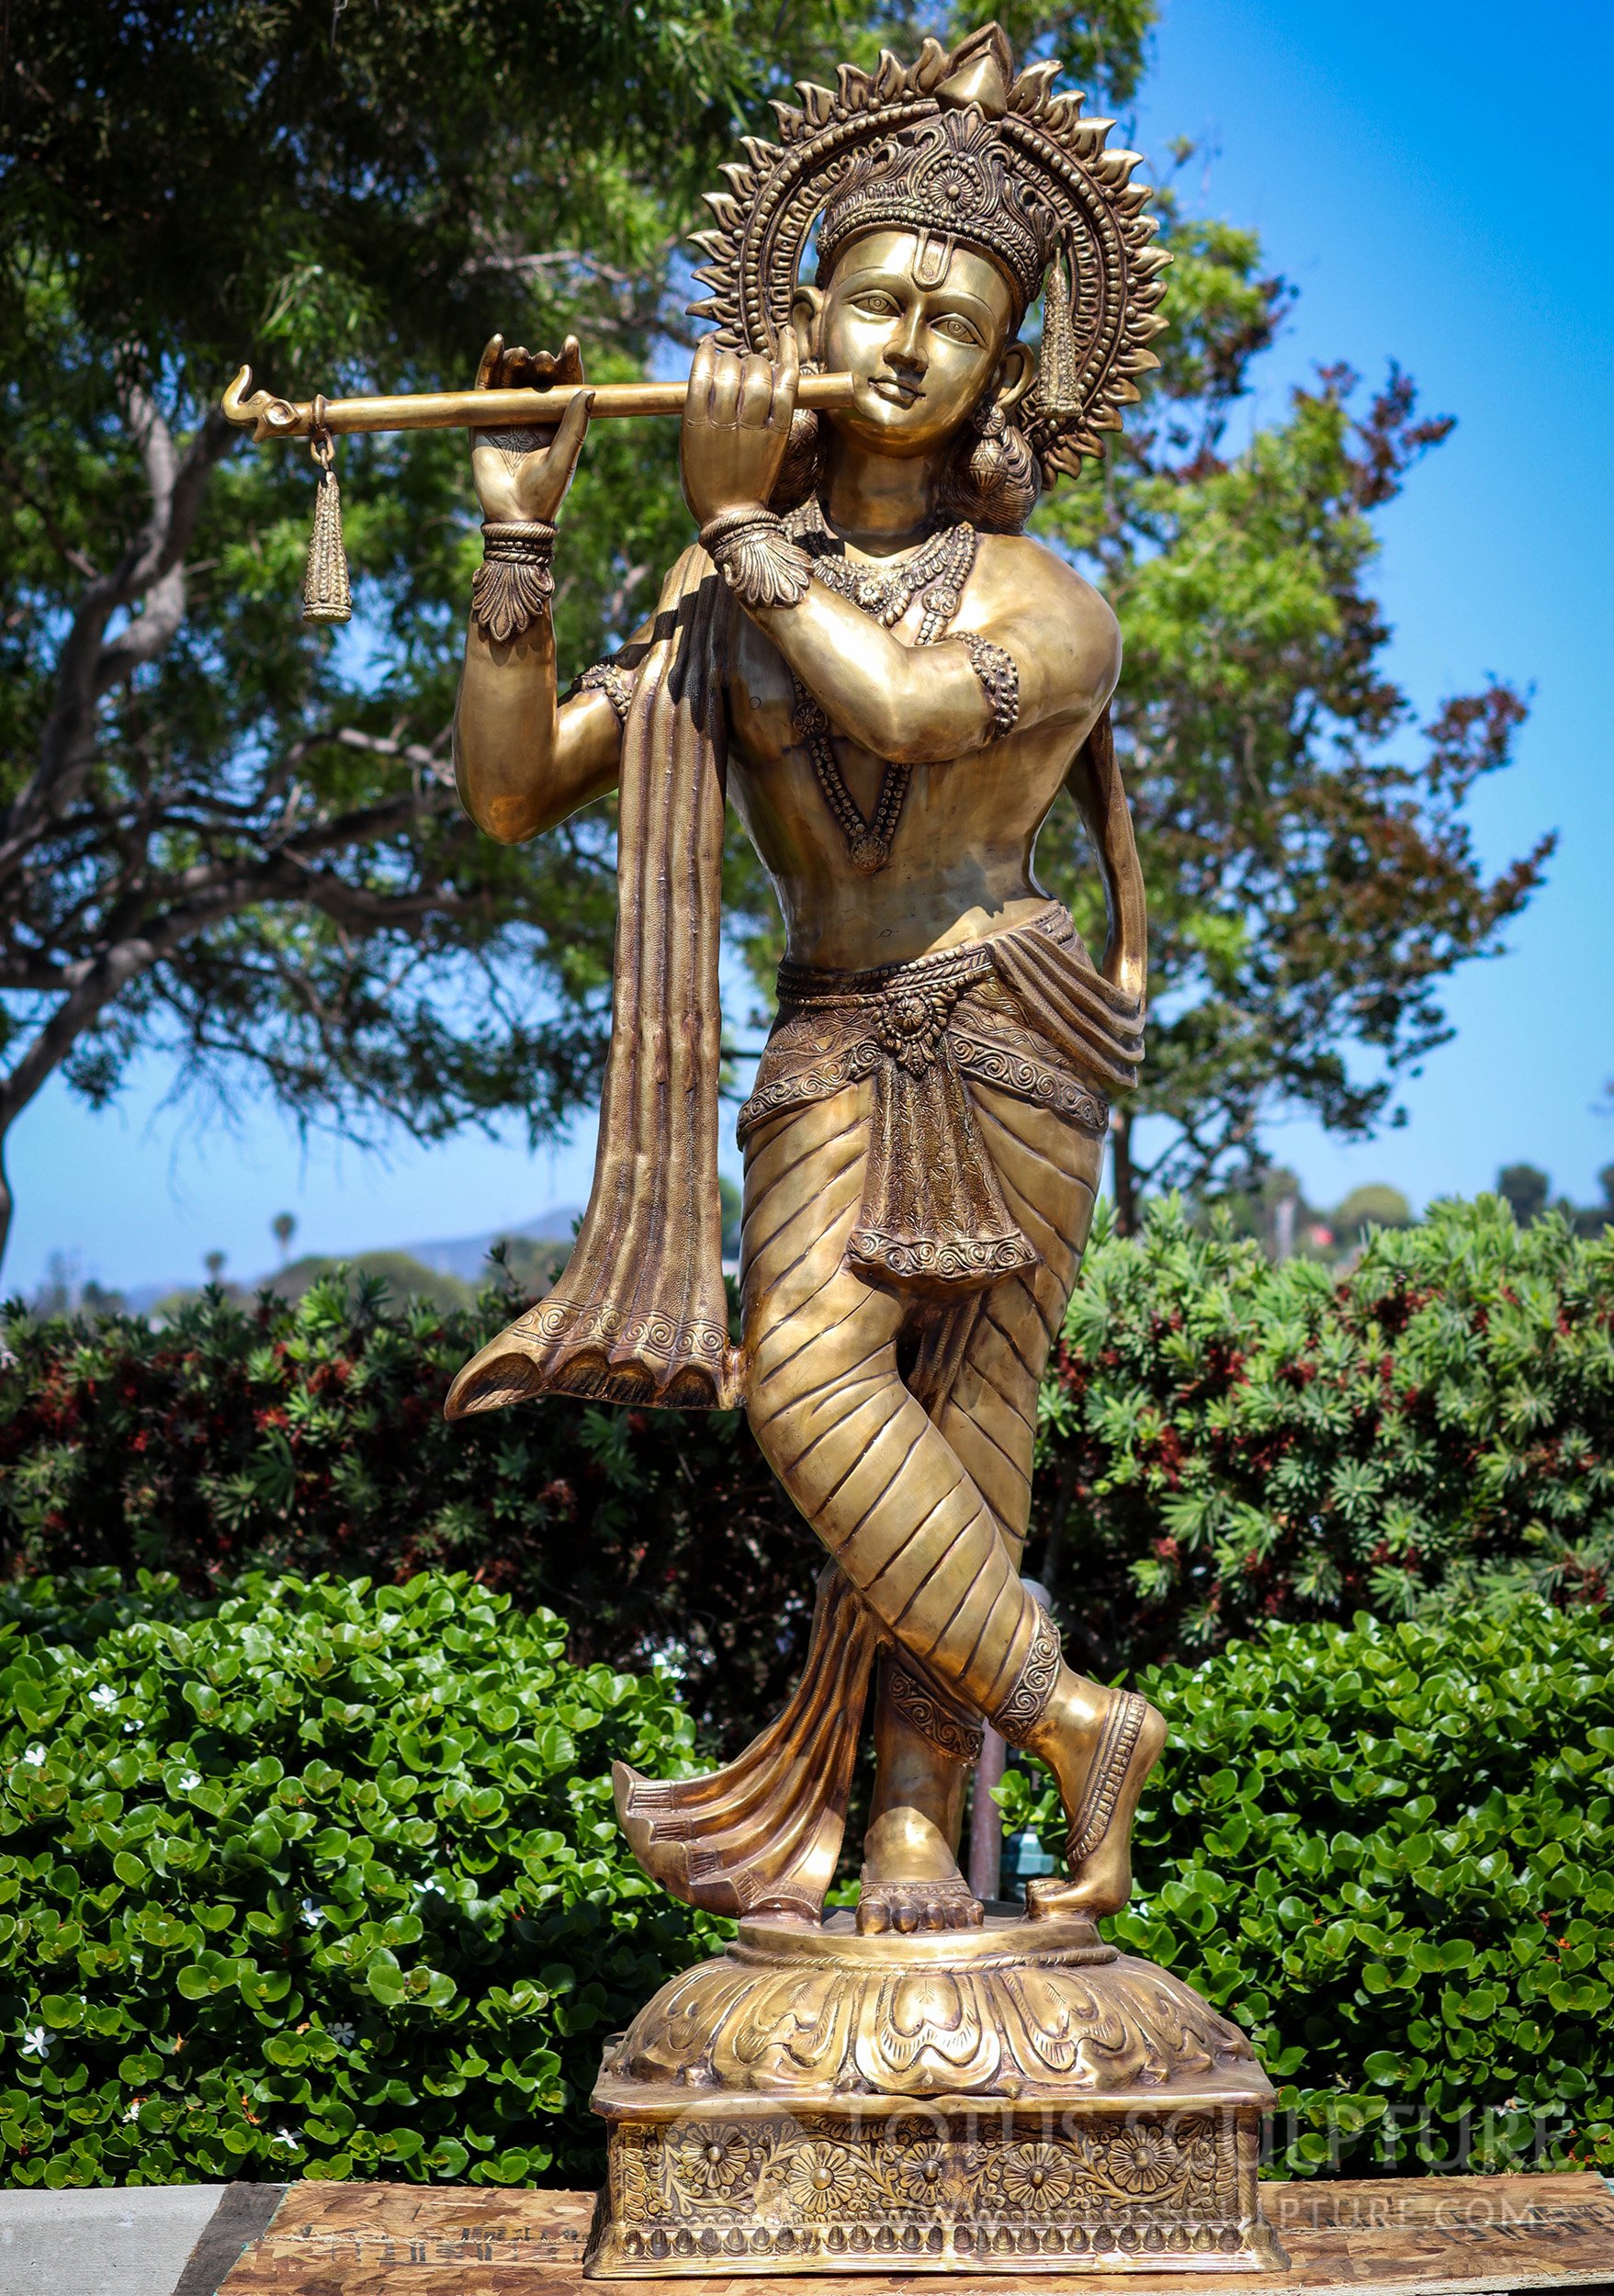 https://www.lotussculpture.com/mm5/graphics/00000001/57/1-large-golden-brass-krishna-playing-flute-leg-crossed-statue-c.jpg